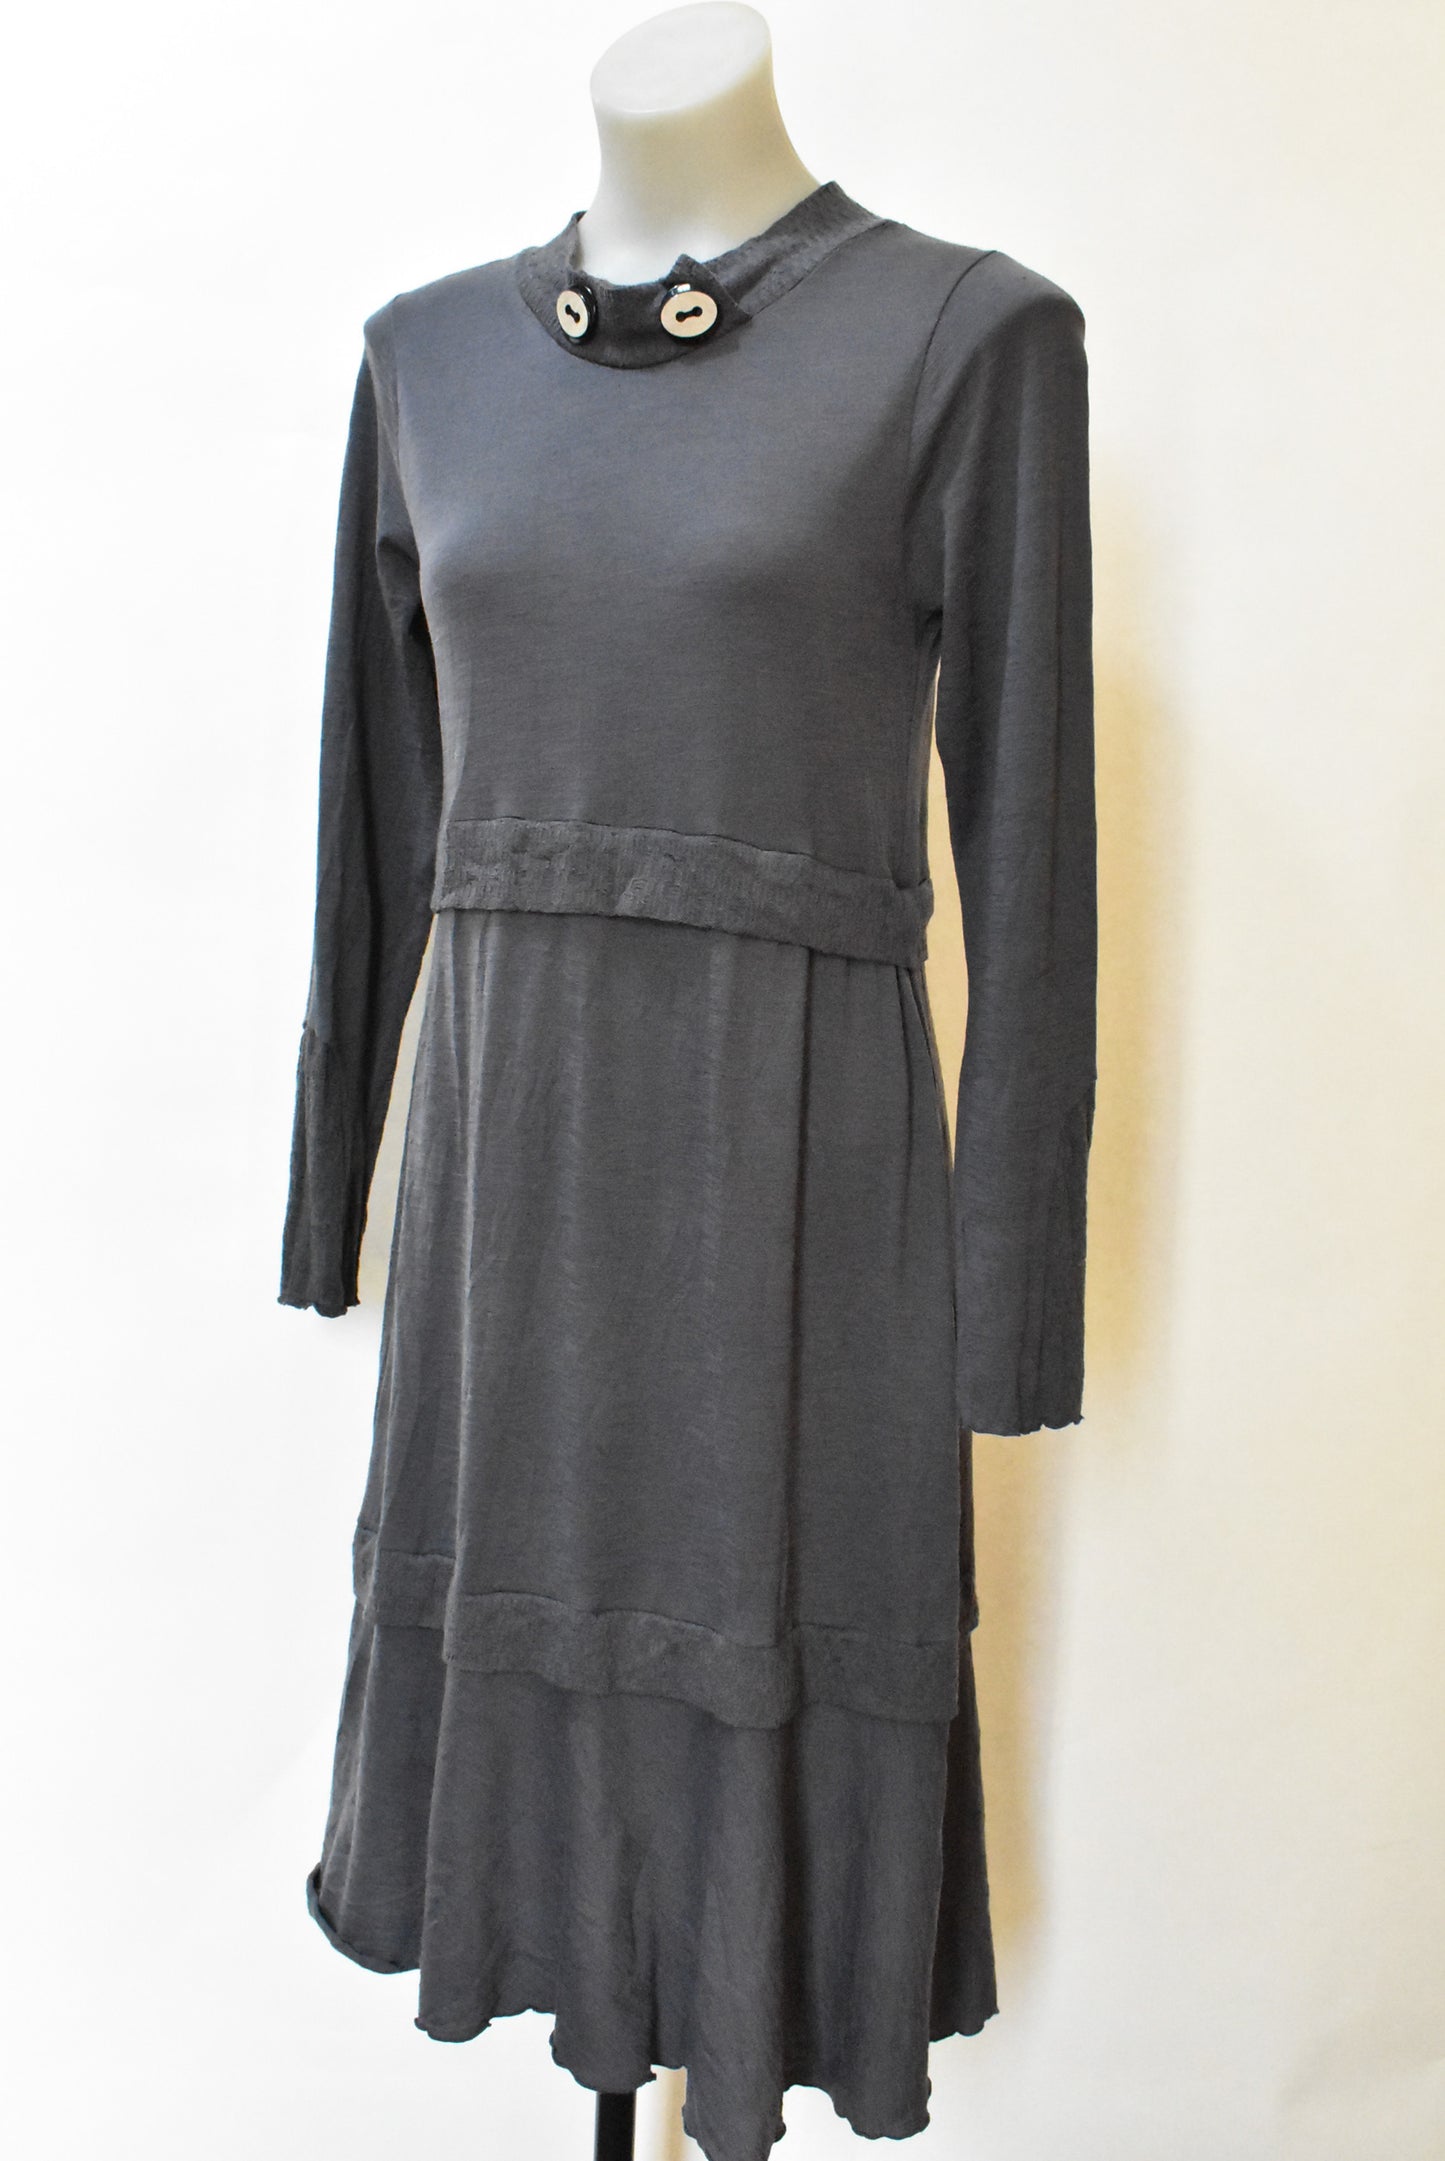 Vigorella wool blend dress, S/M